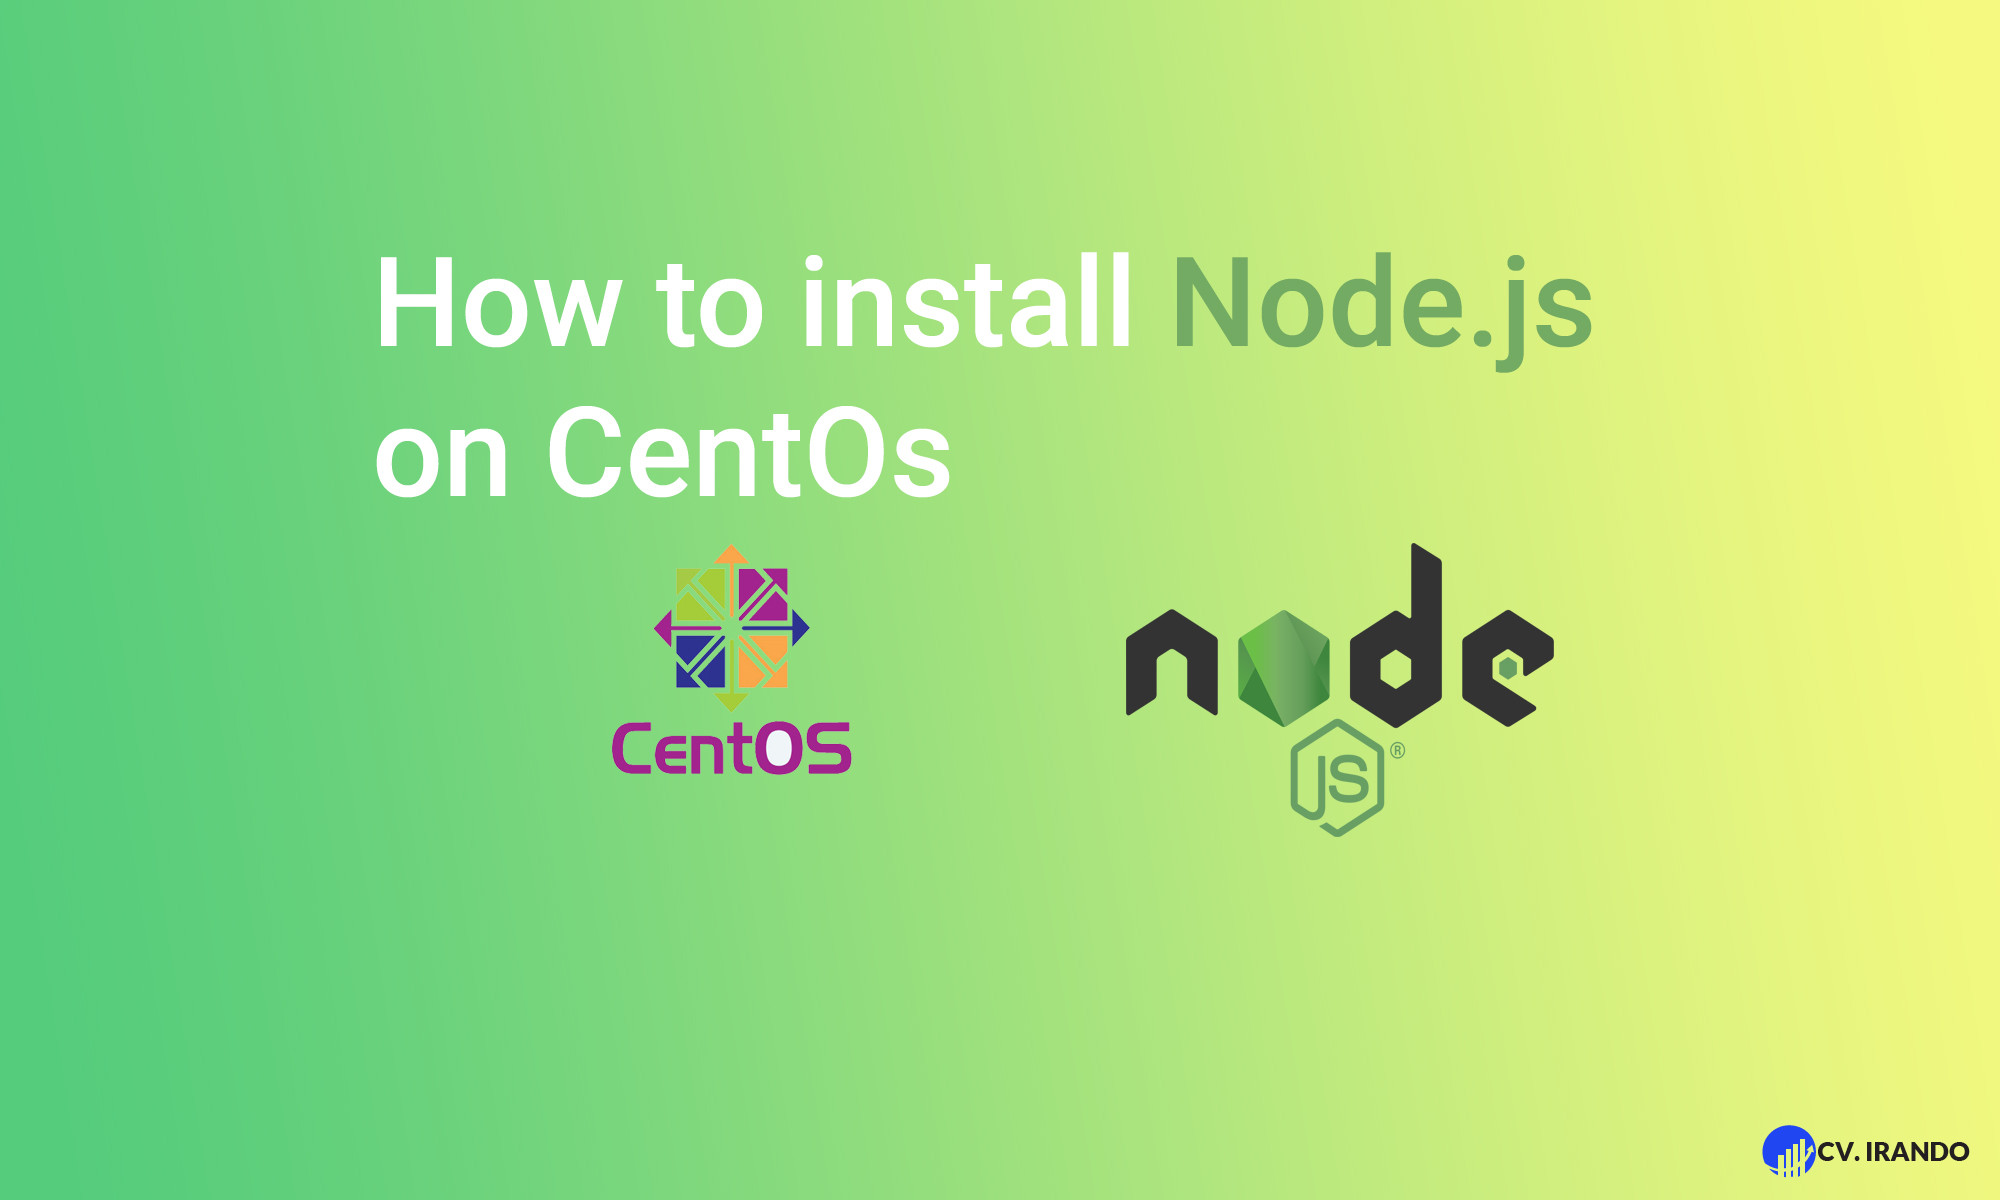 How To Install Latest Nodejs on CentOS - RHEL 7